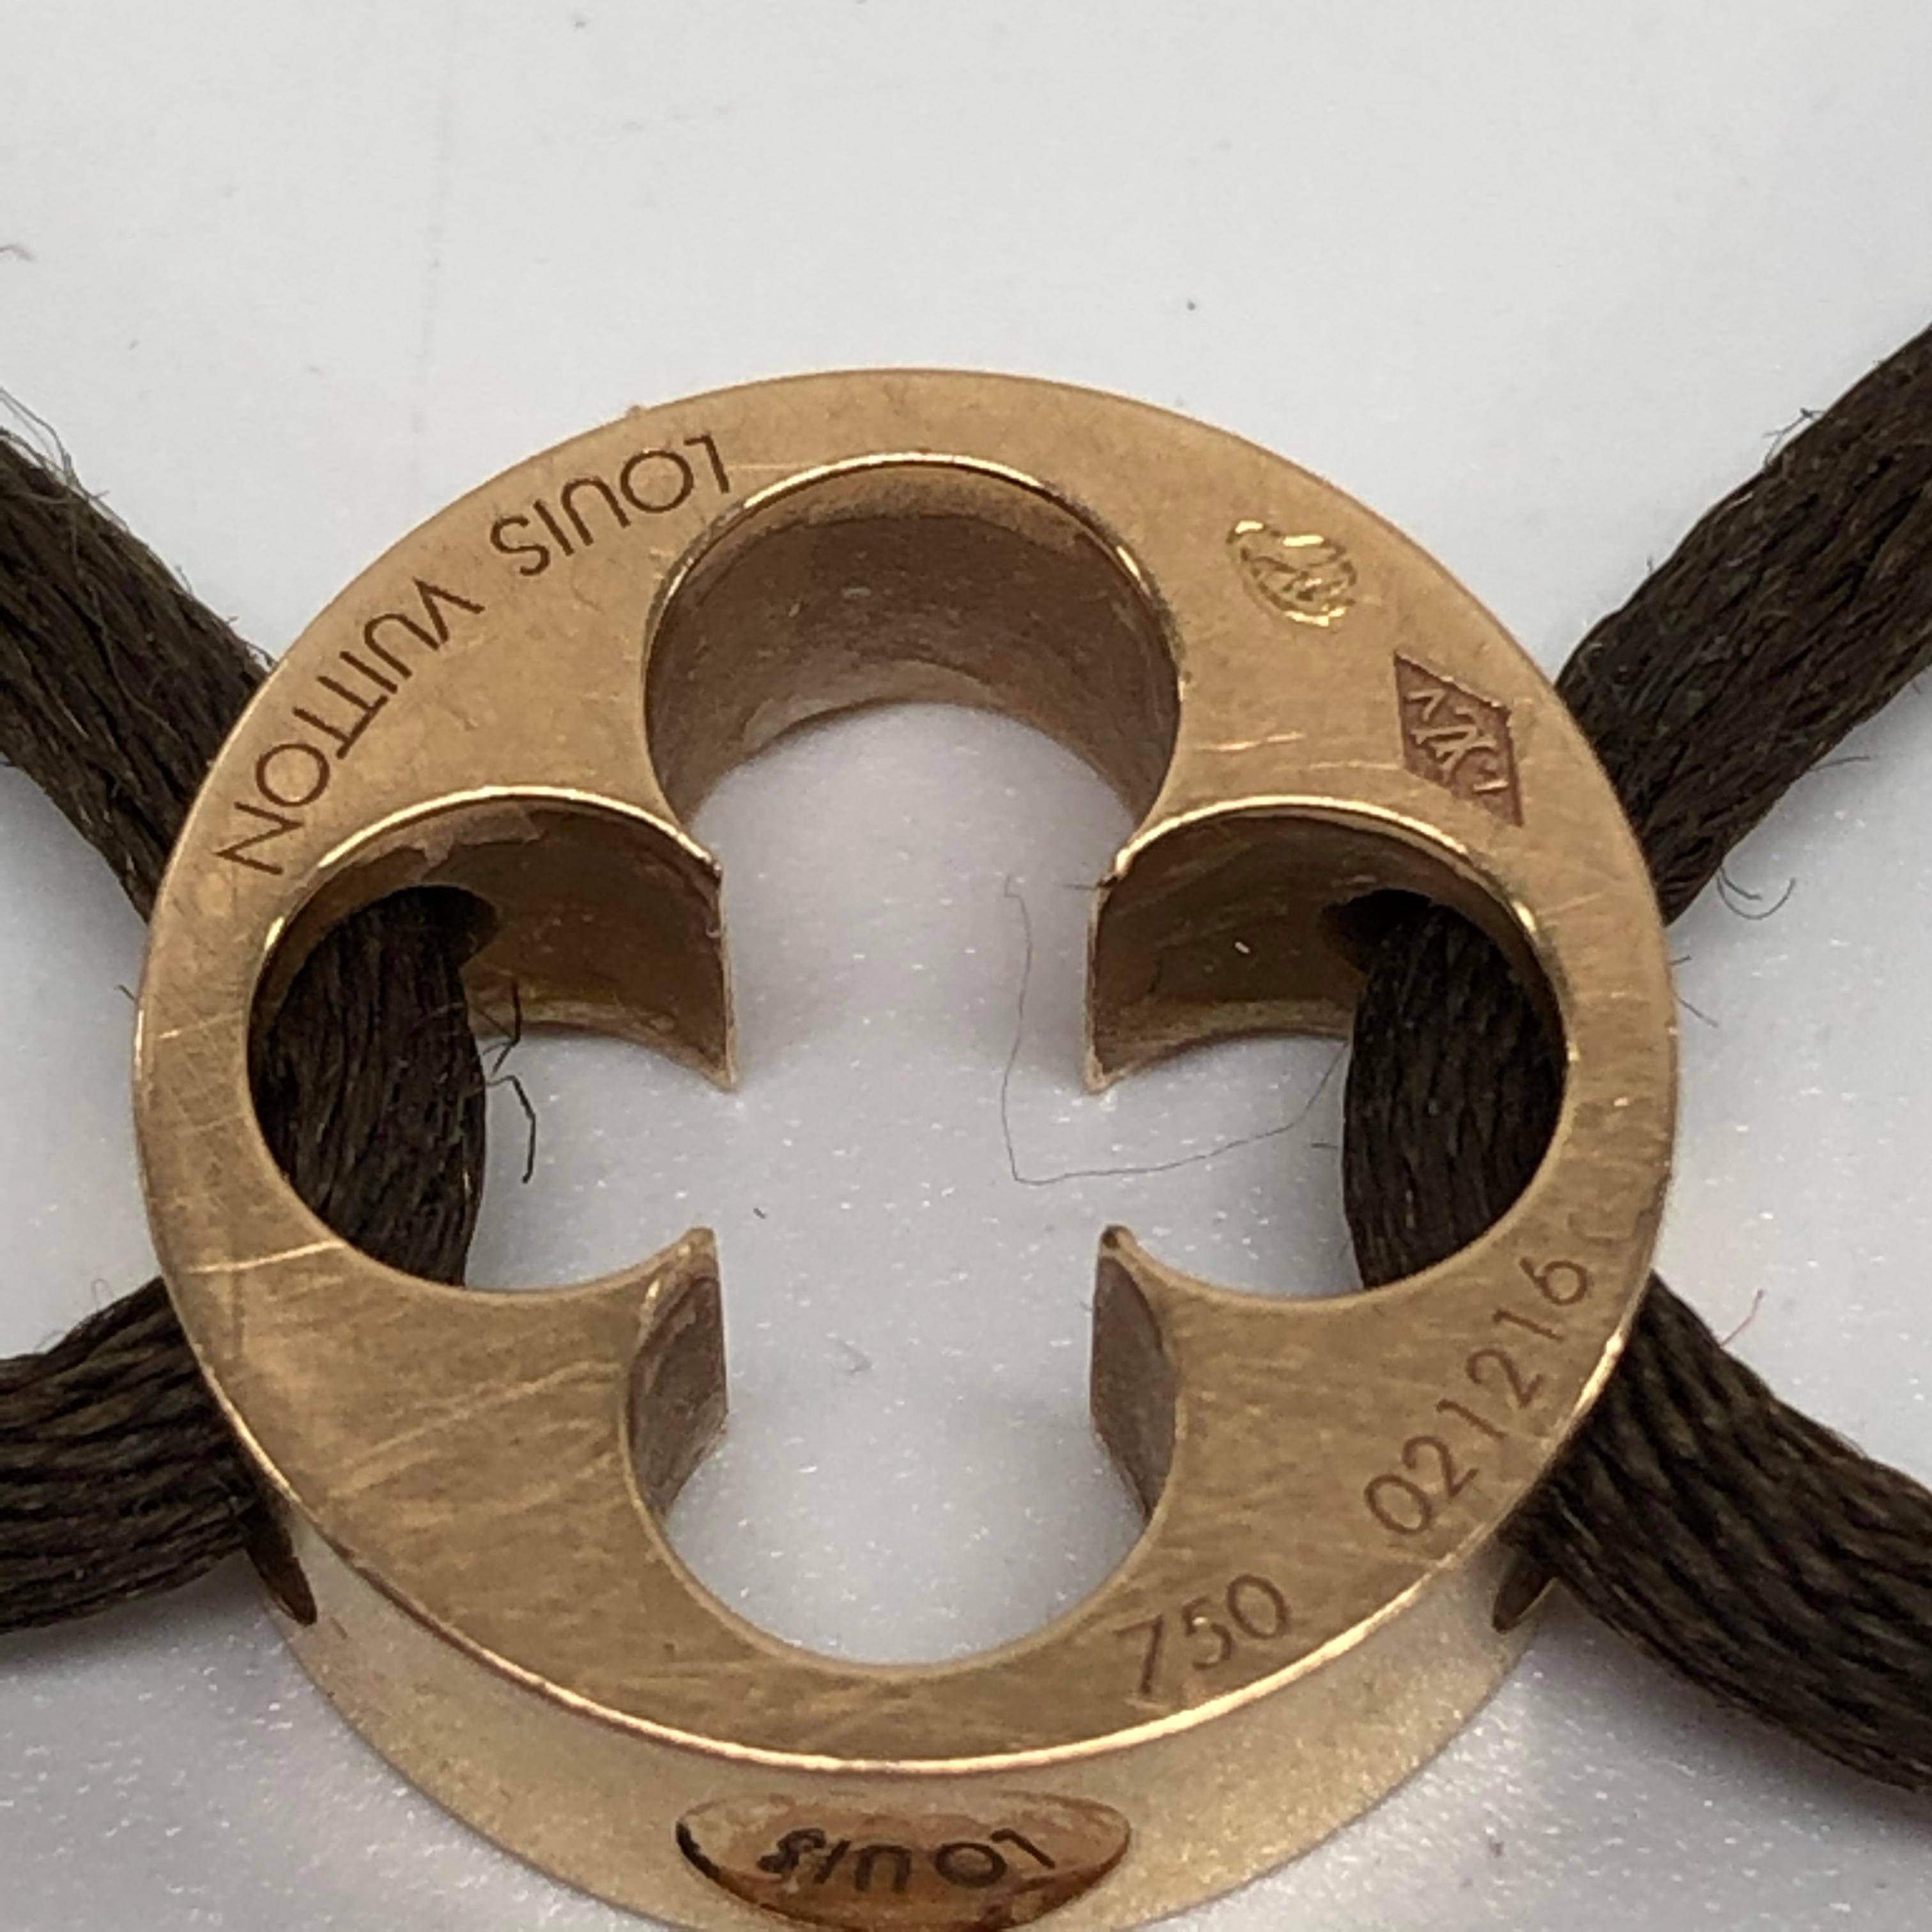 Louis Vuitton Medallion Empreinte Necklace